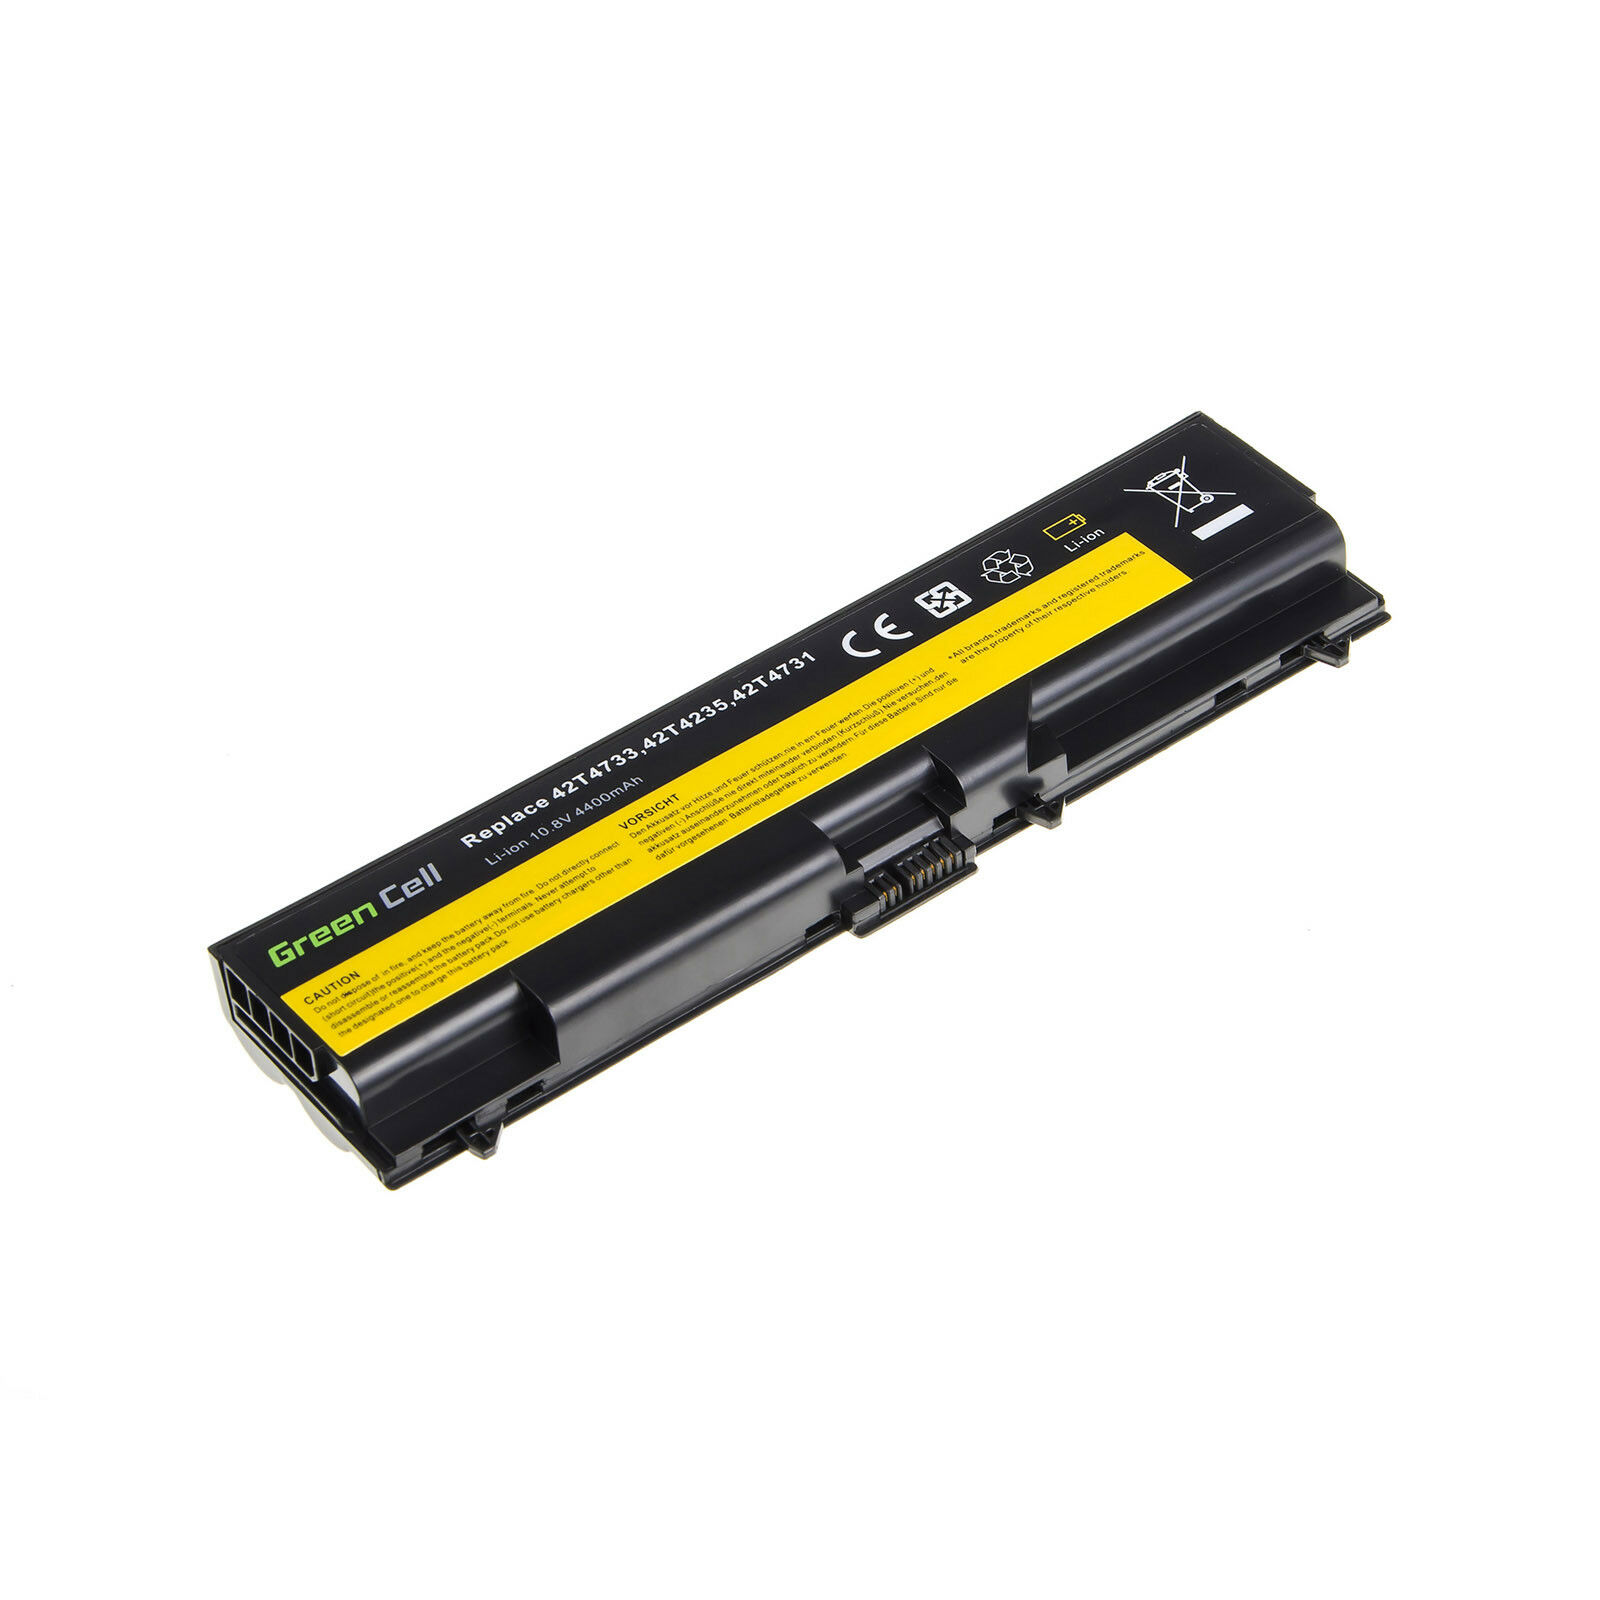 Batería para LENOVO THINKPAD L430 T430 L530 T530 T530I W530 45N1001 45N1011(compatible)